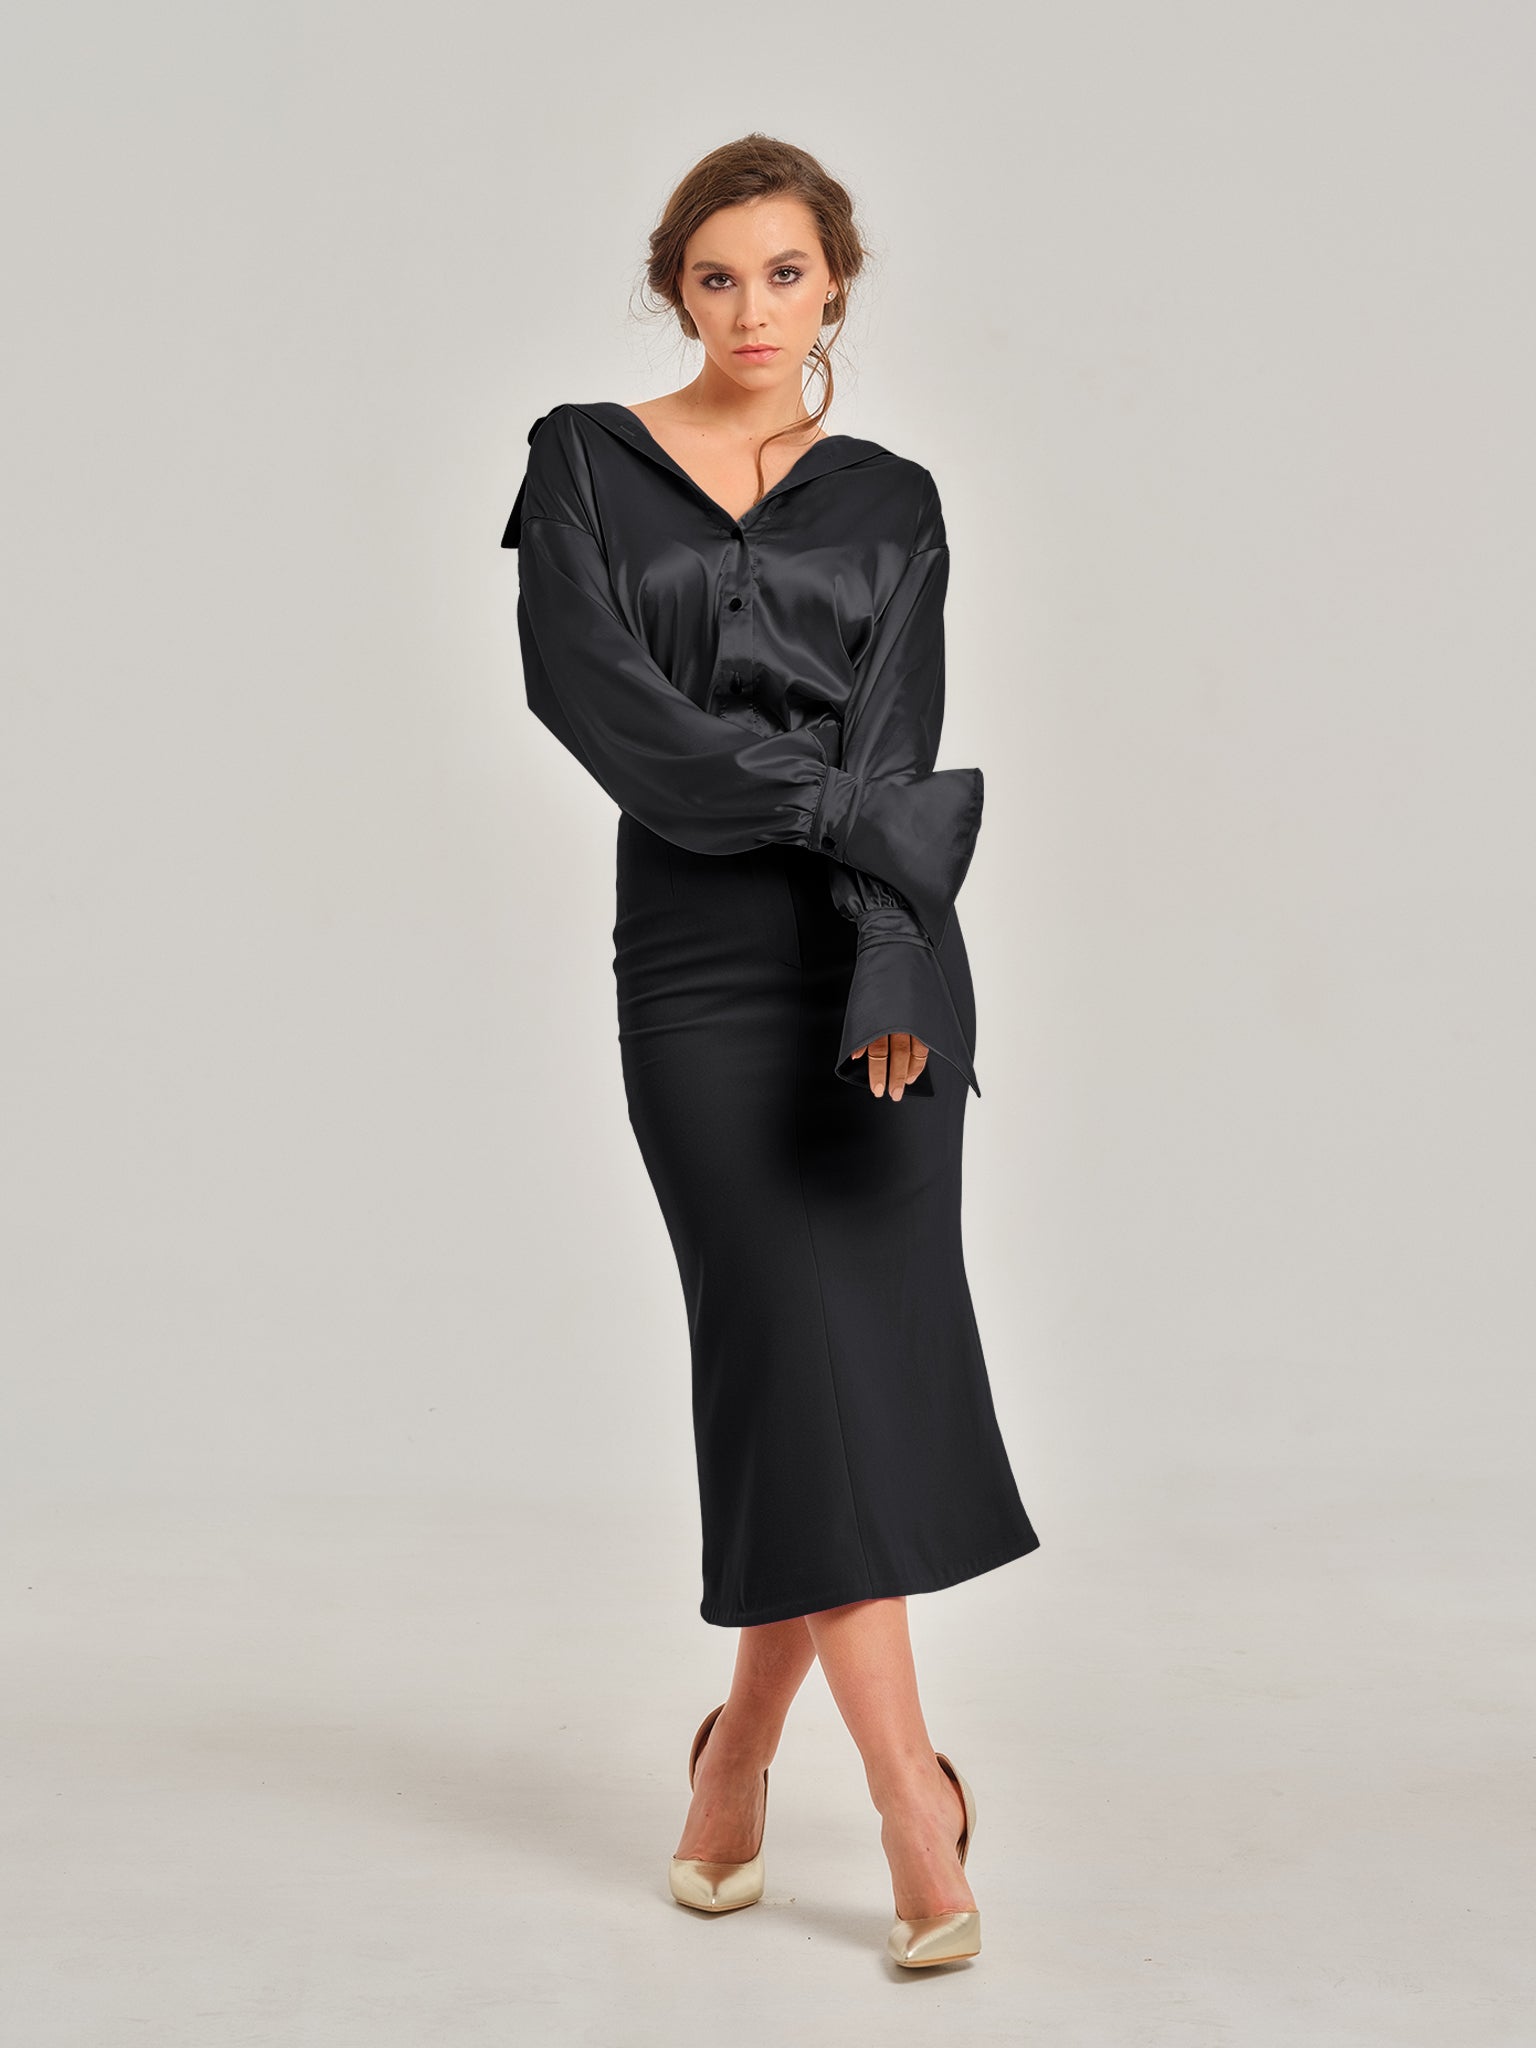 Magnetic Power Trumpet Midi Skirt by Tia Dorraine Women's Luxury Fashion Designer Clothing Brand